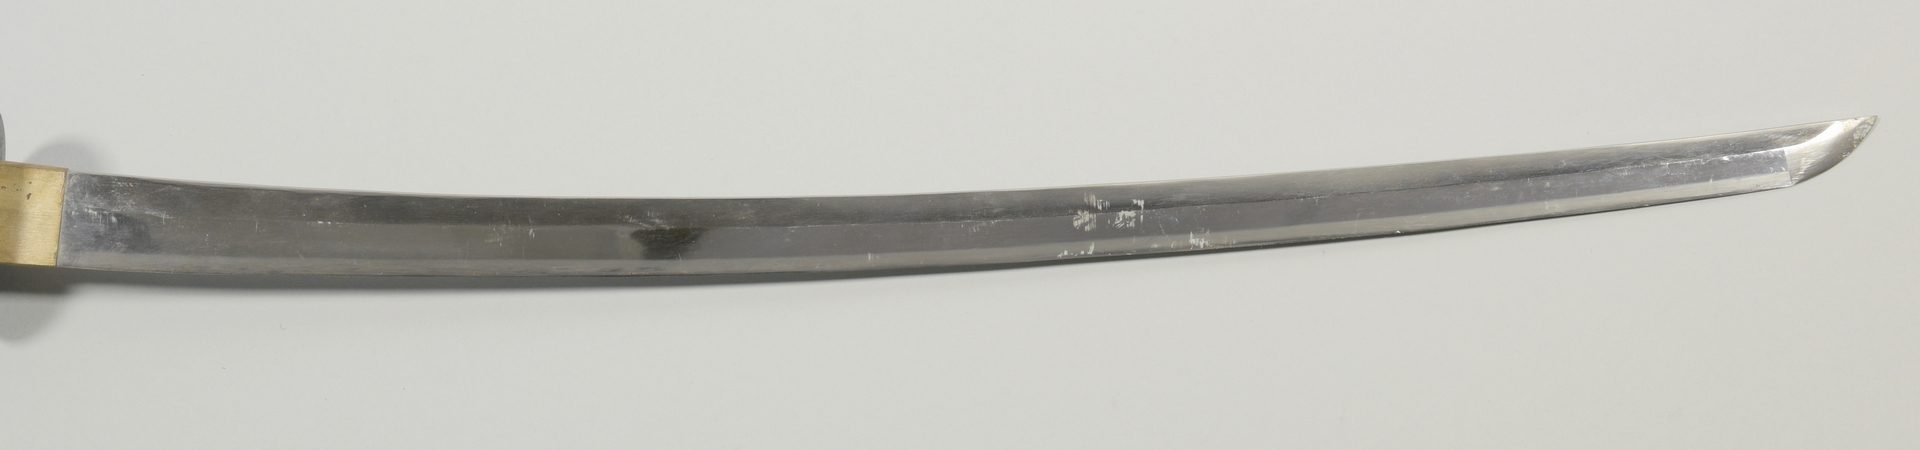 Lot 314: WWII Era Japanese Naval Officer's Sword